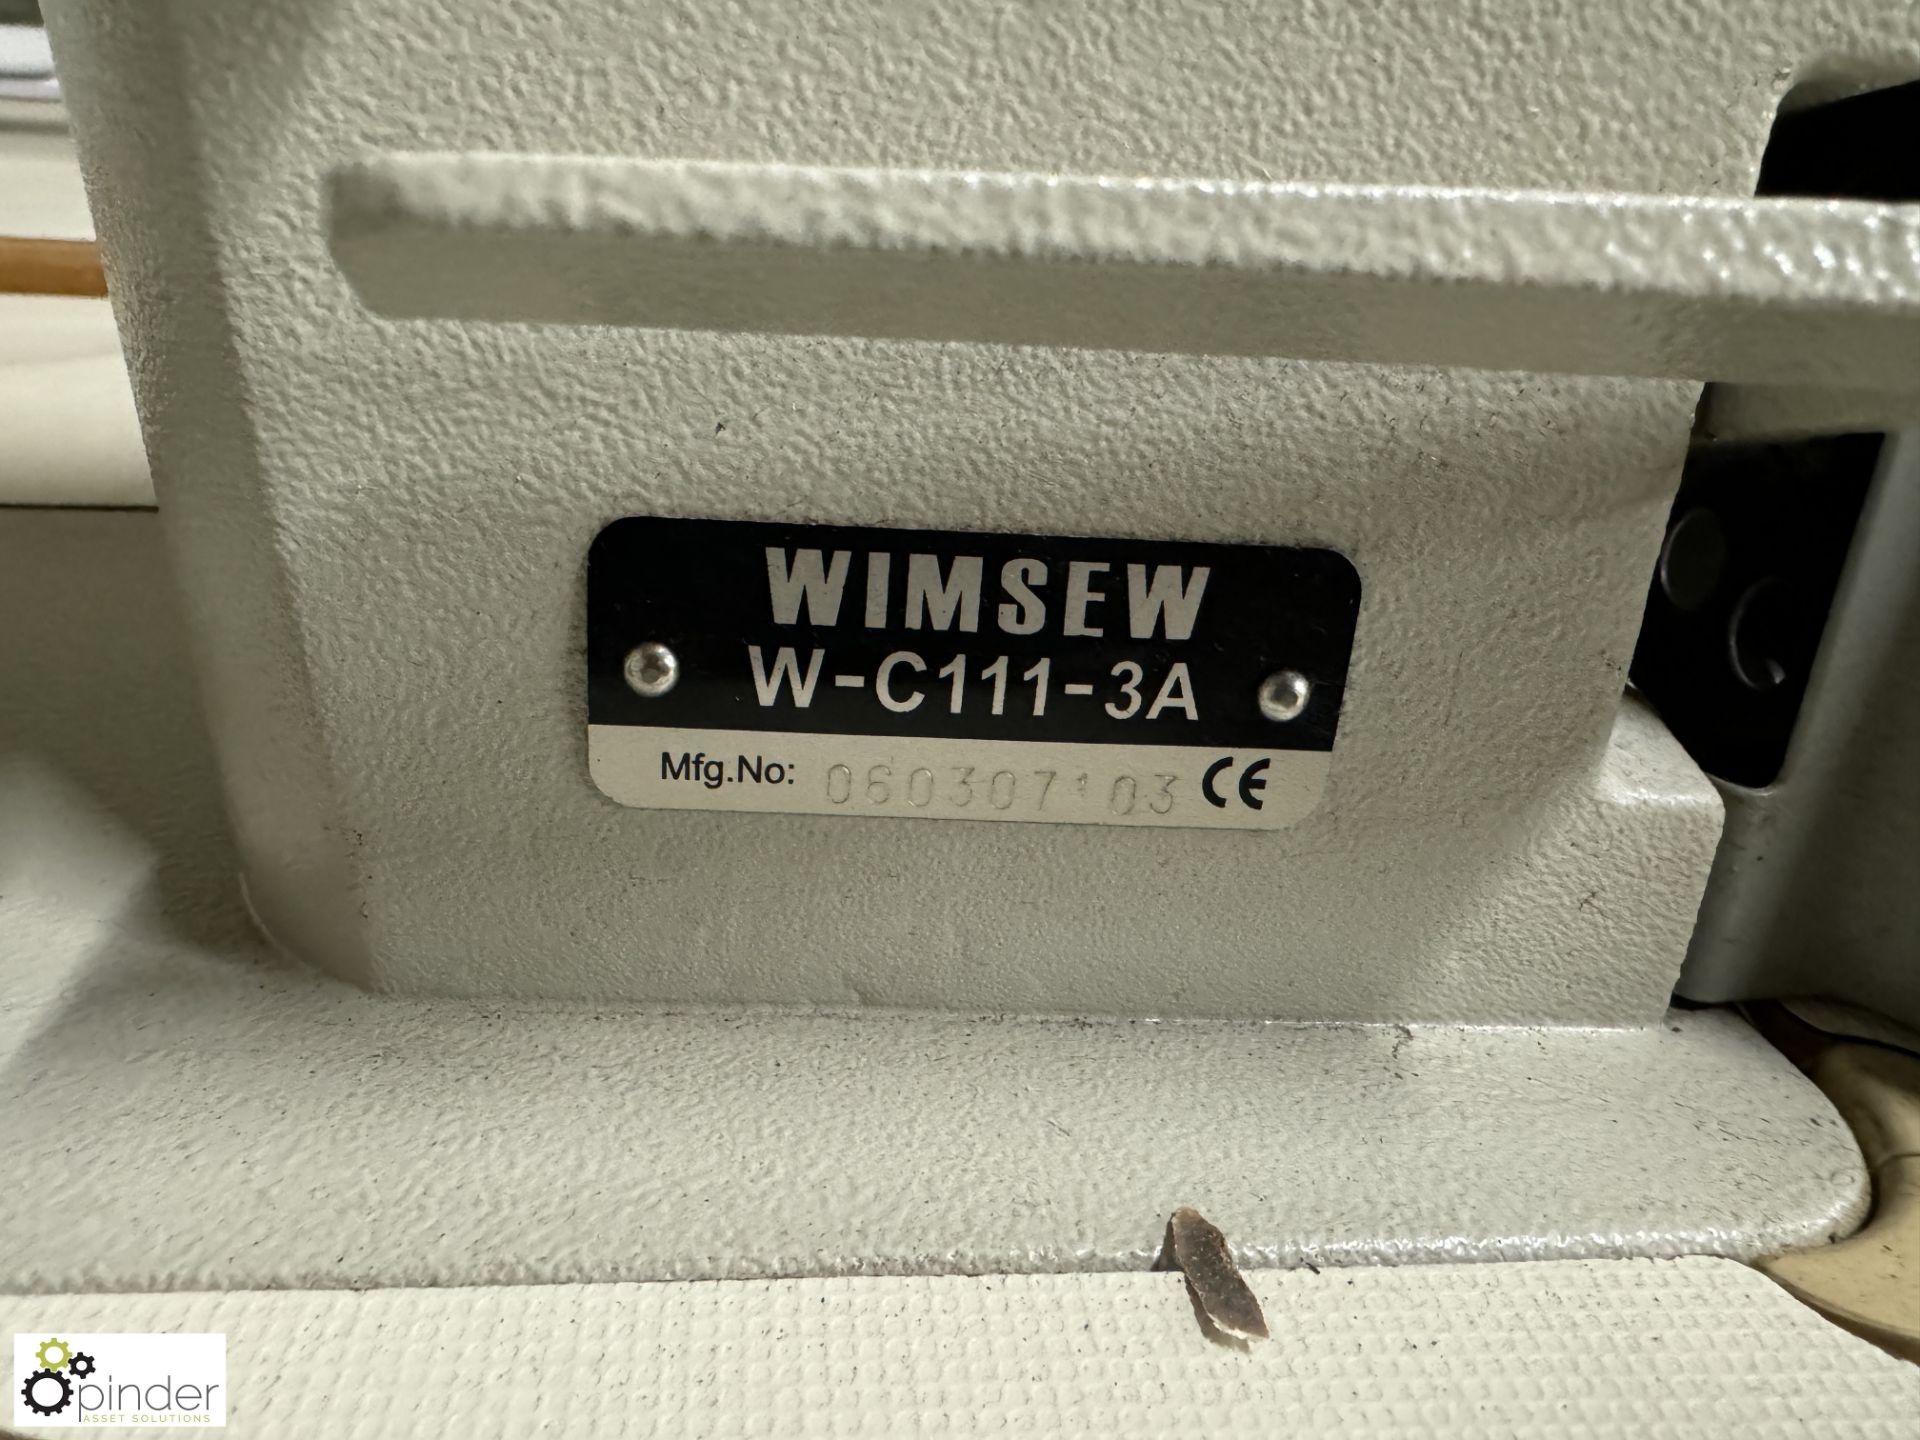 Wimsew W-C111-3A flat bed Lockstitch, 240volts - Image 3 of 5